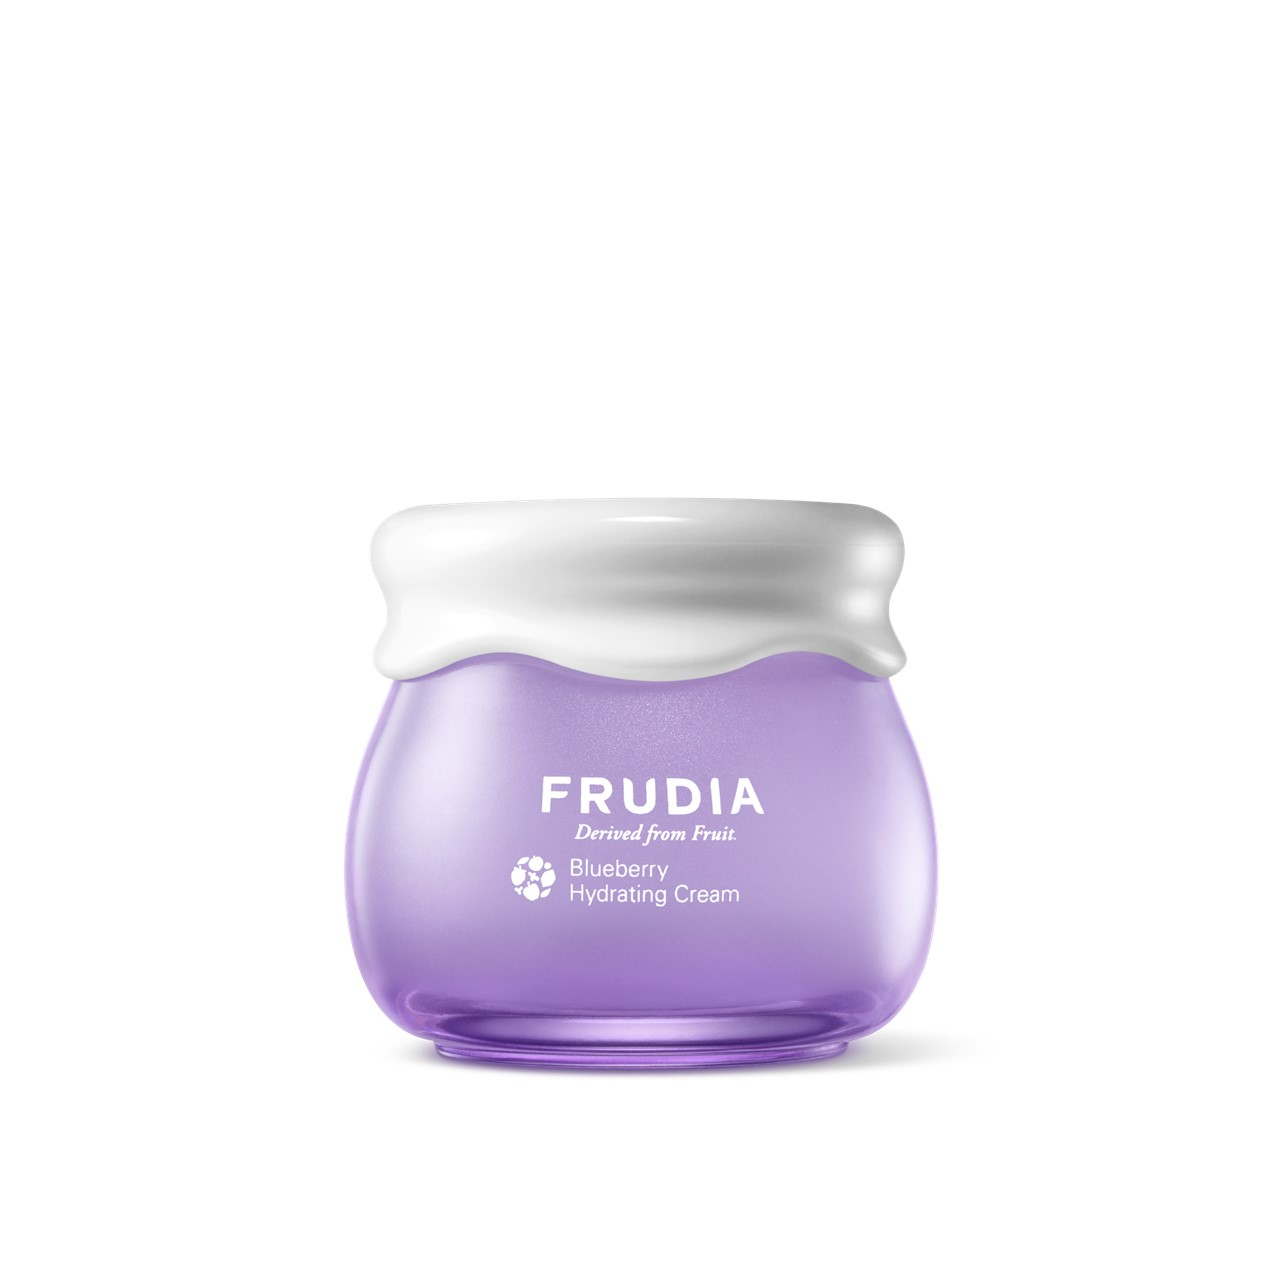 Frudia Blueberry Hydrating Cream 55g (1.94 oz)